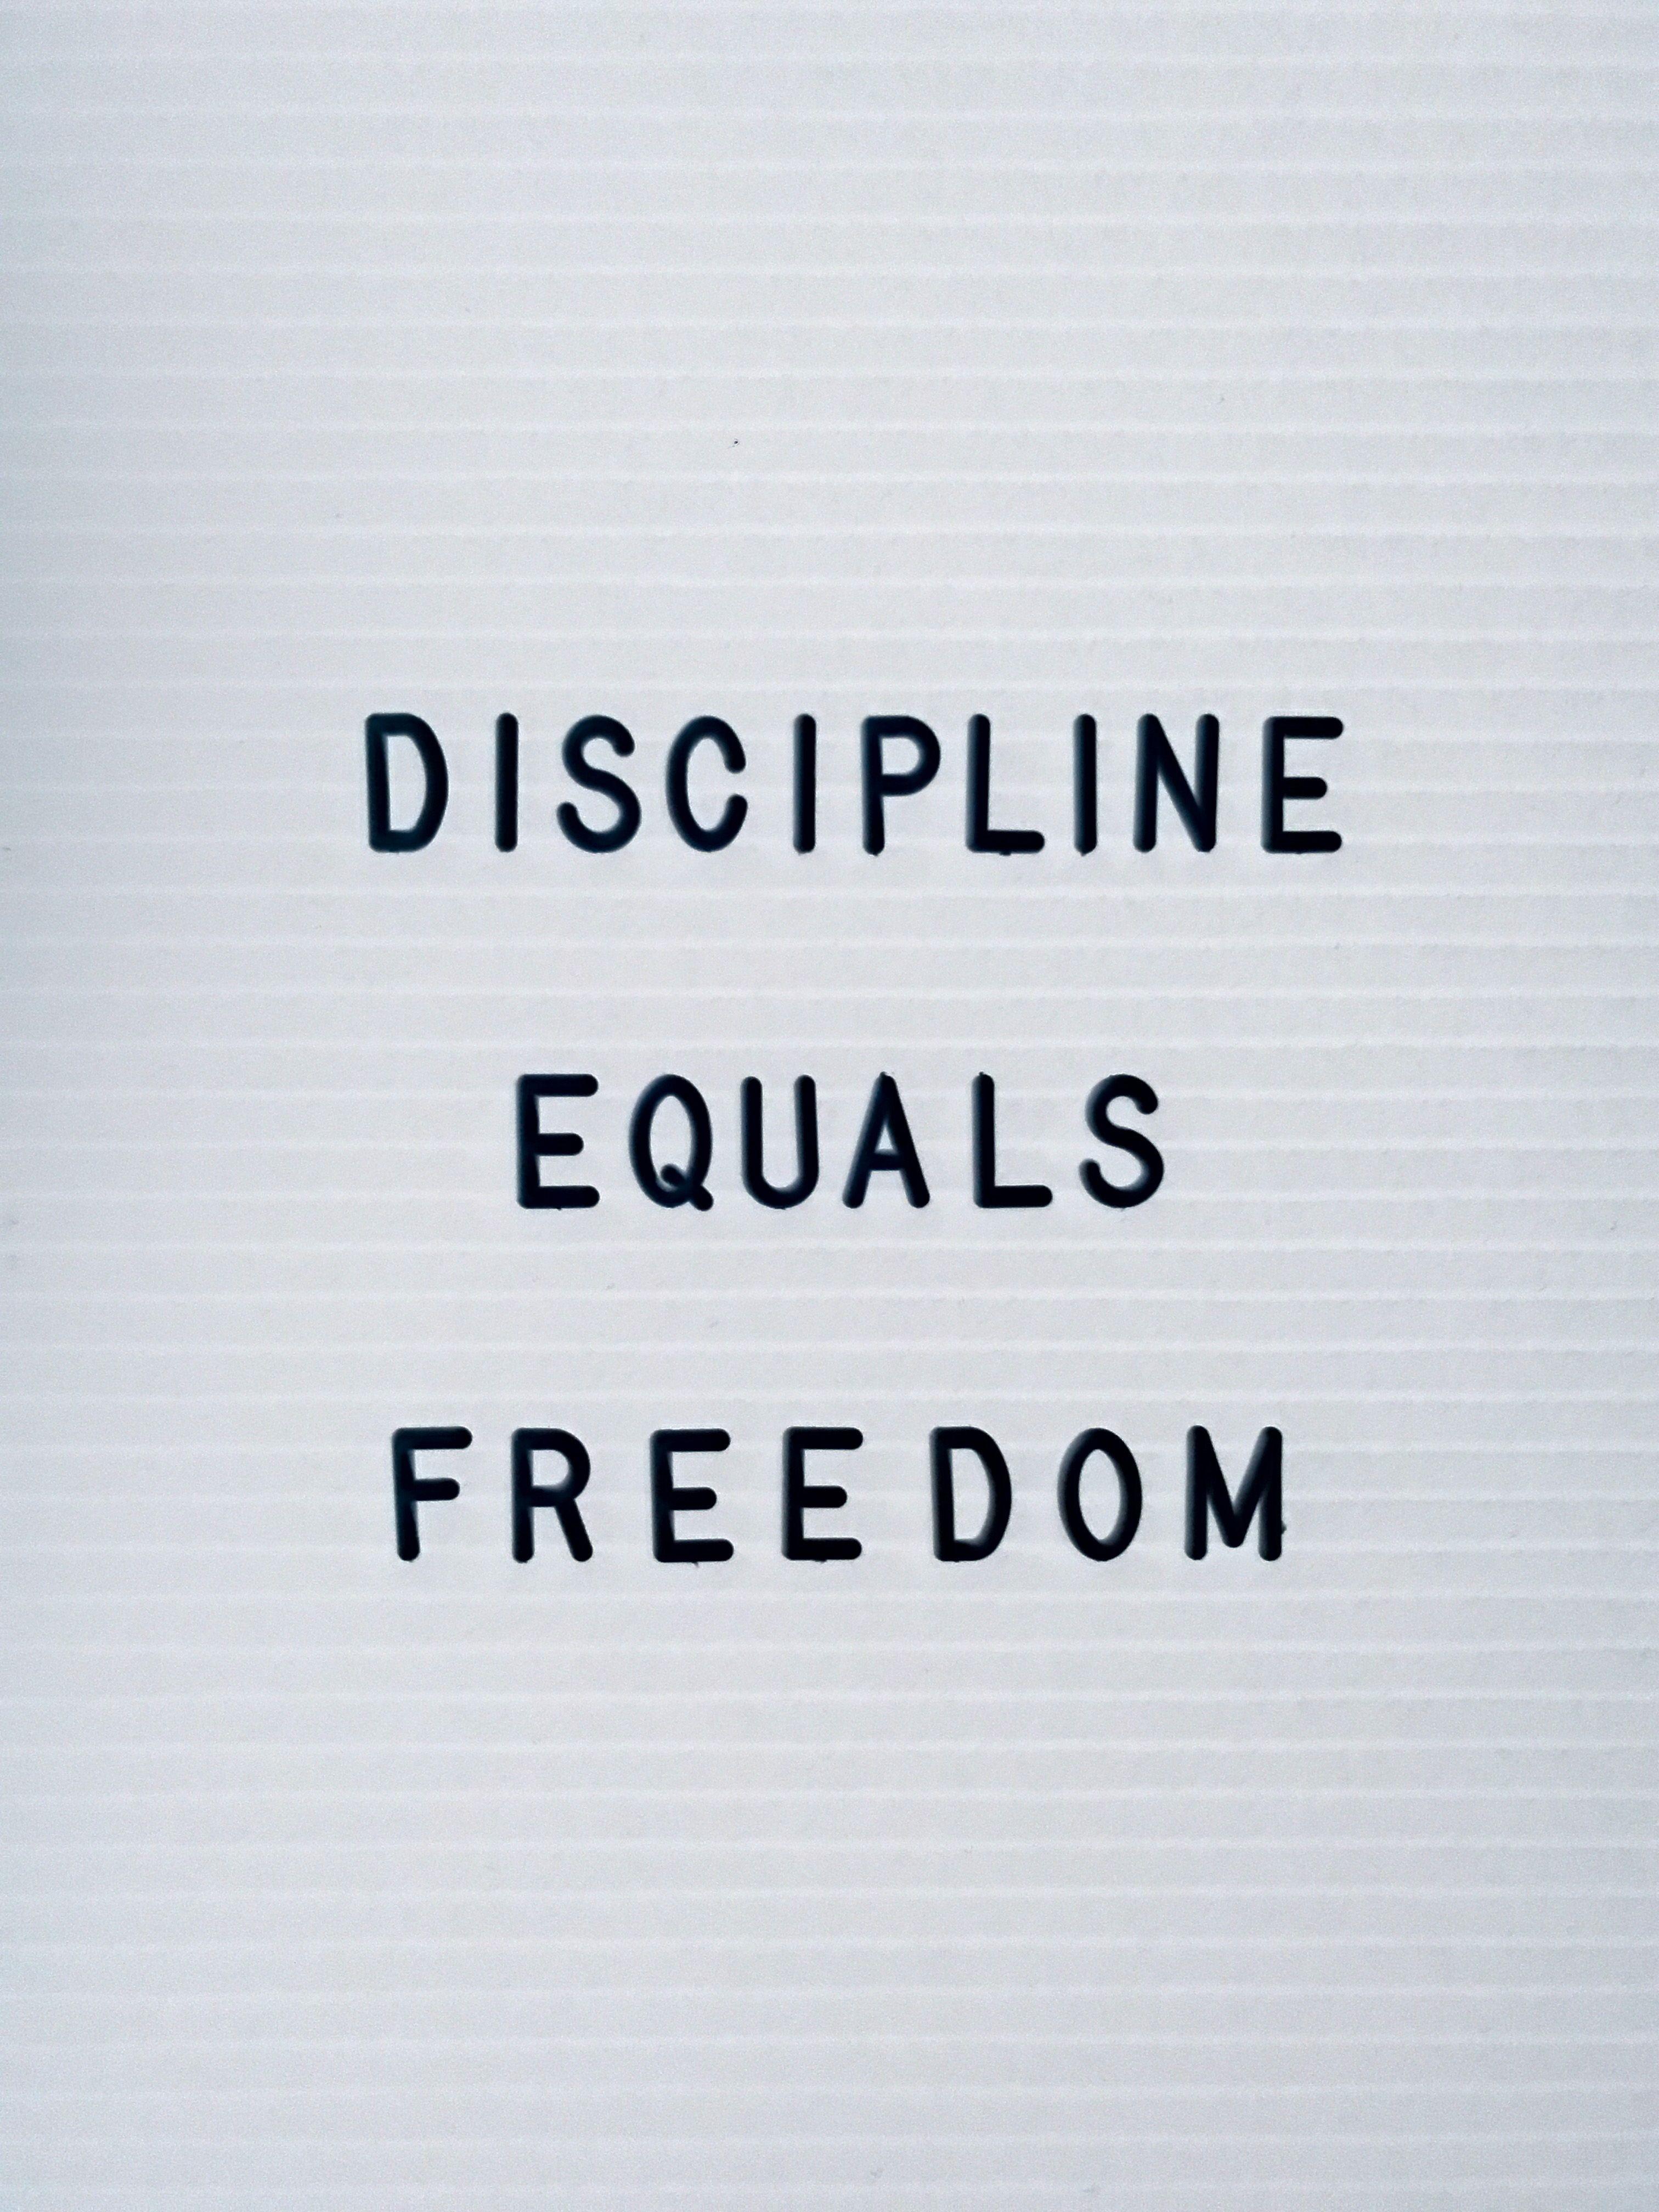 30 Days of Discipline